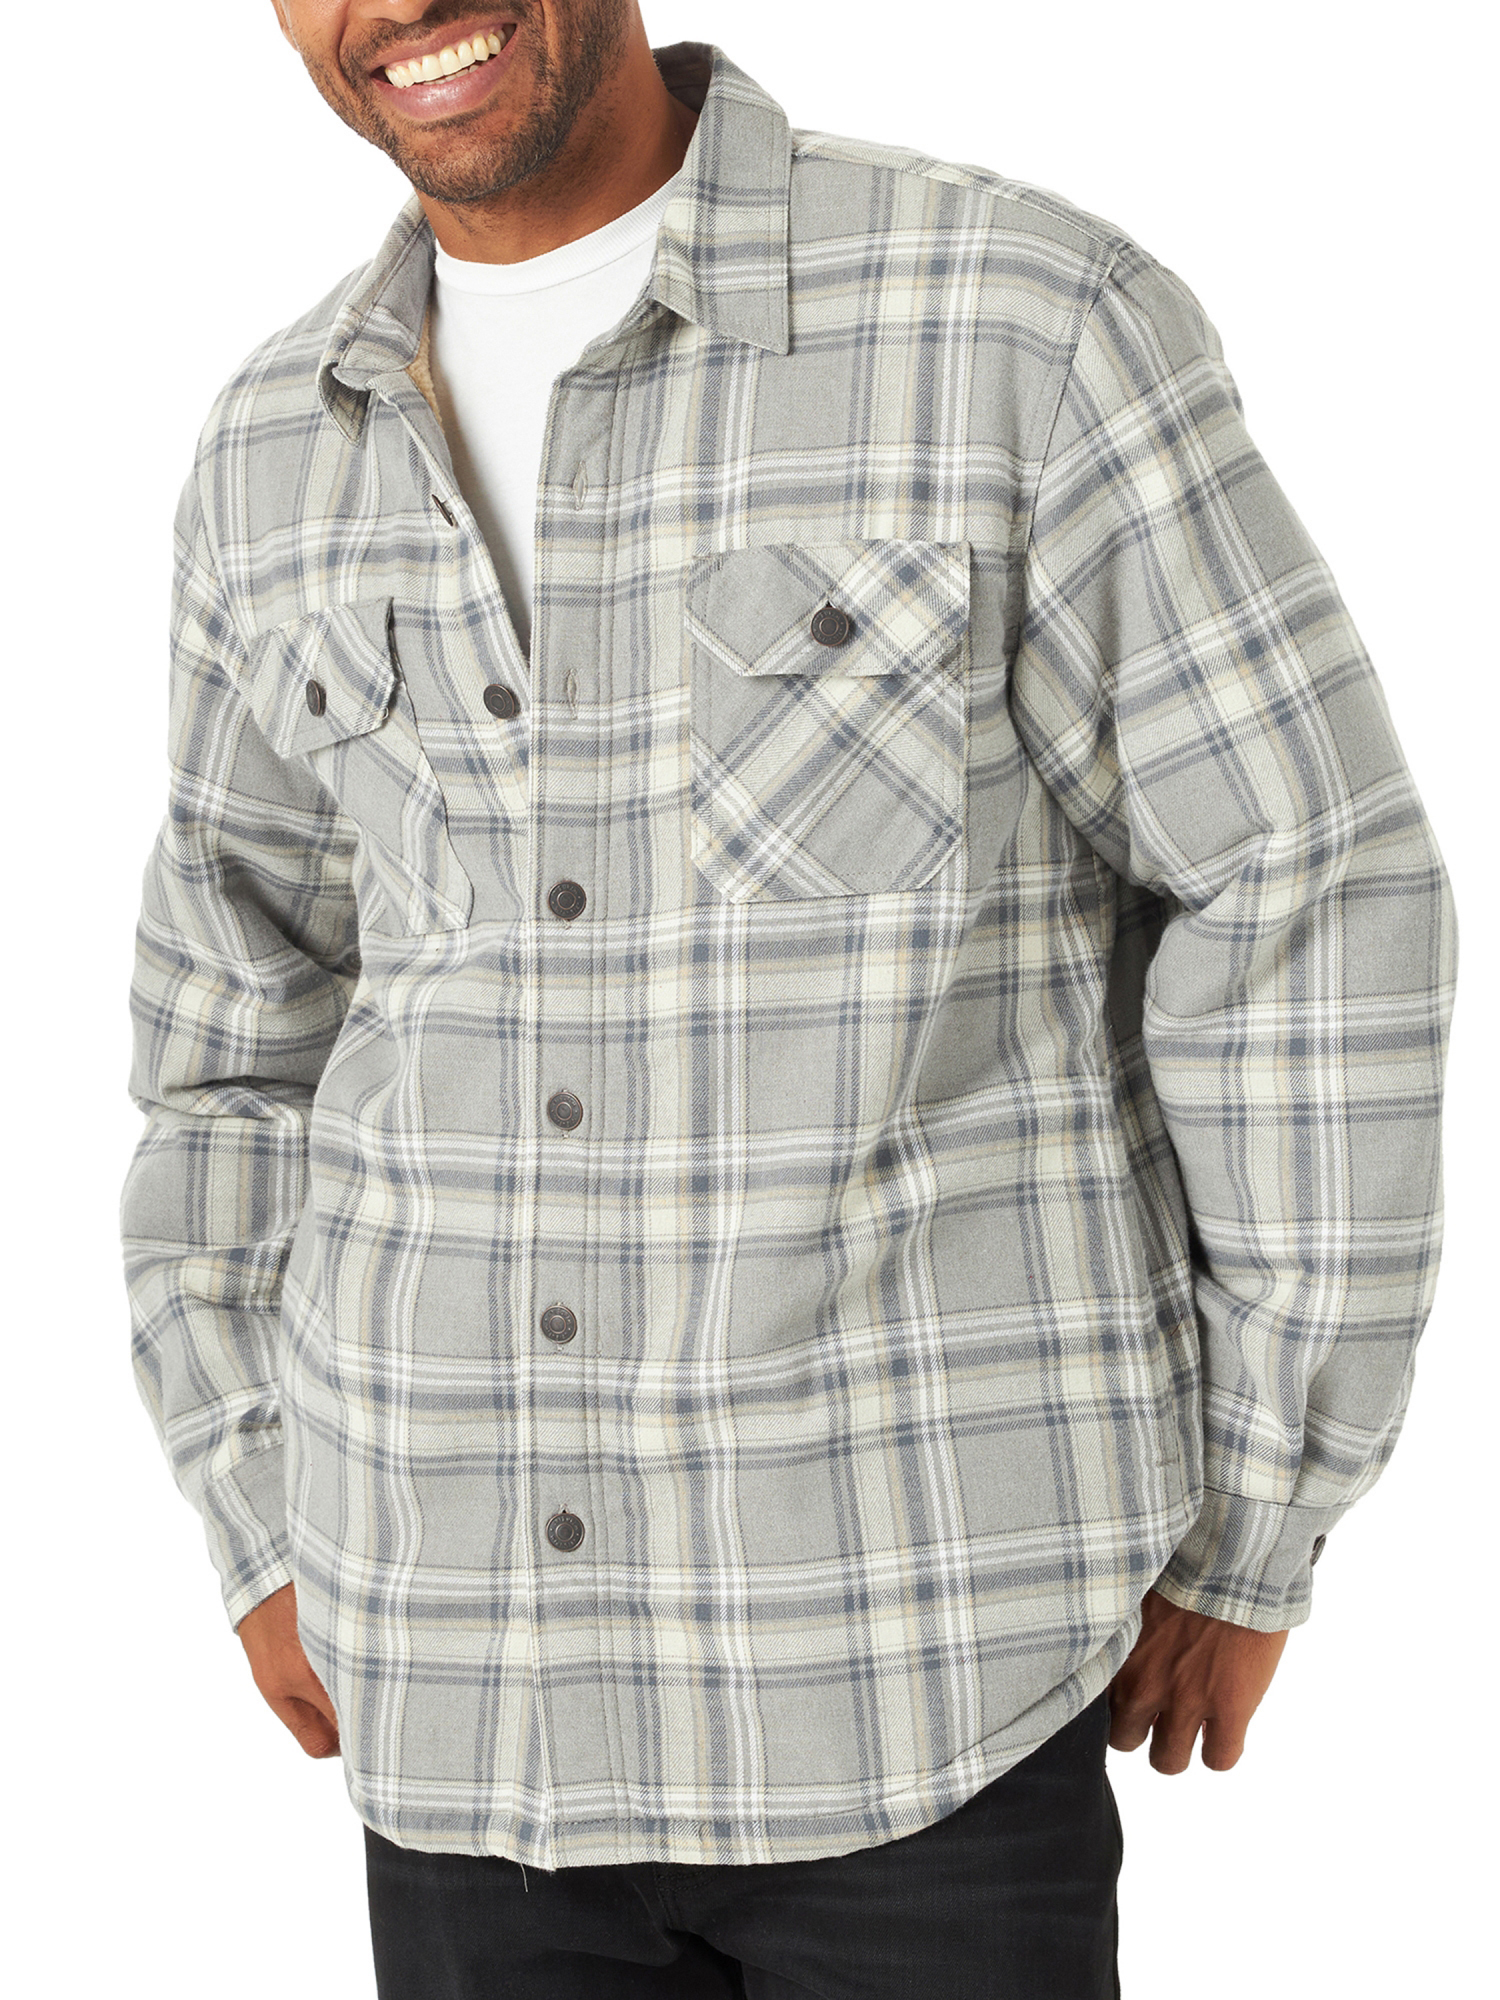 Wrangler Men's Heavyweight Sherpa-Lined Shirt Jacket - image 1 of 5